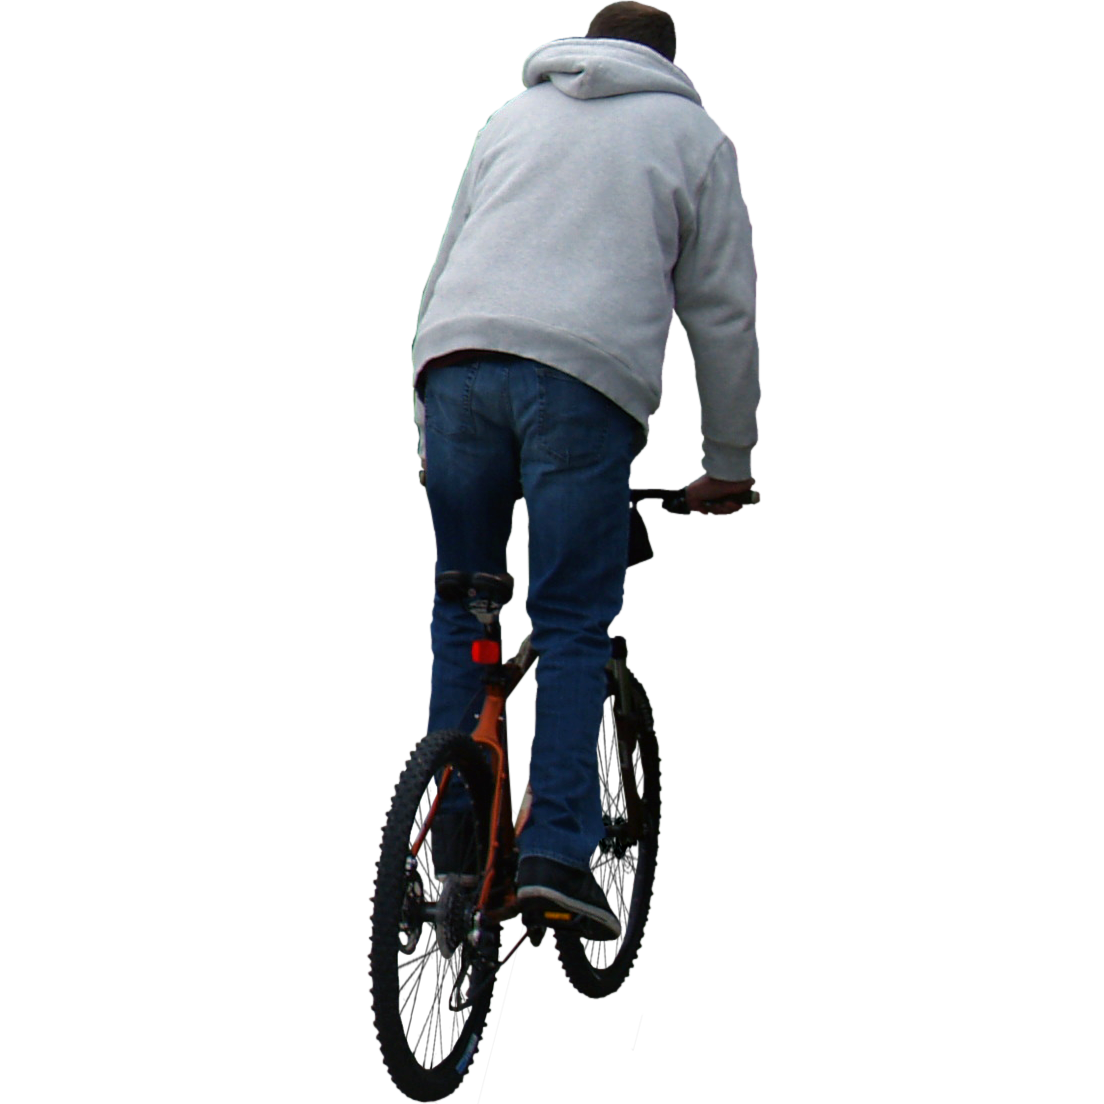 Children Riding Bikes PNG-Plu